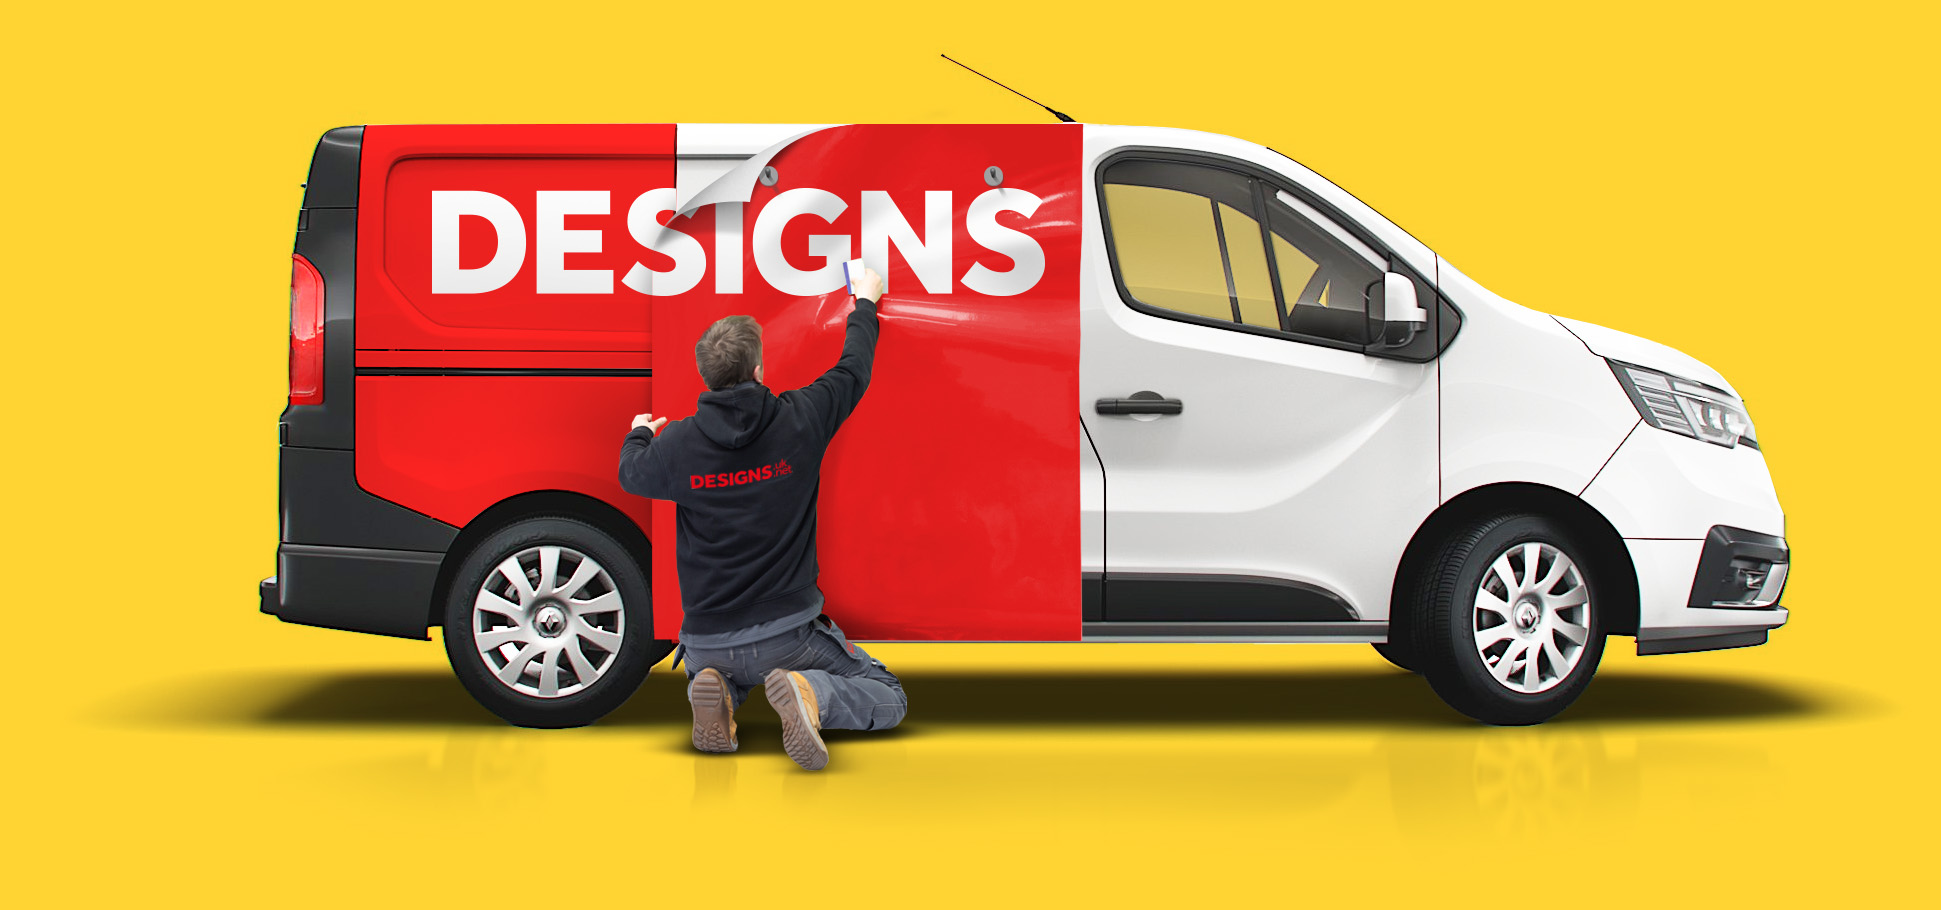 Designs employee fitting custom vehicle graphic.